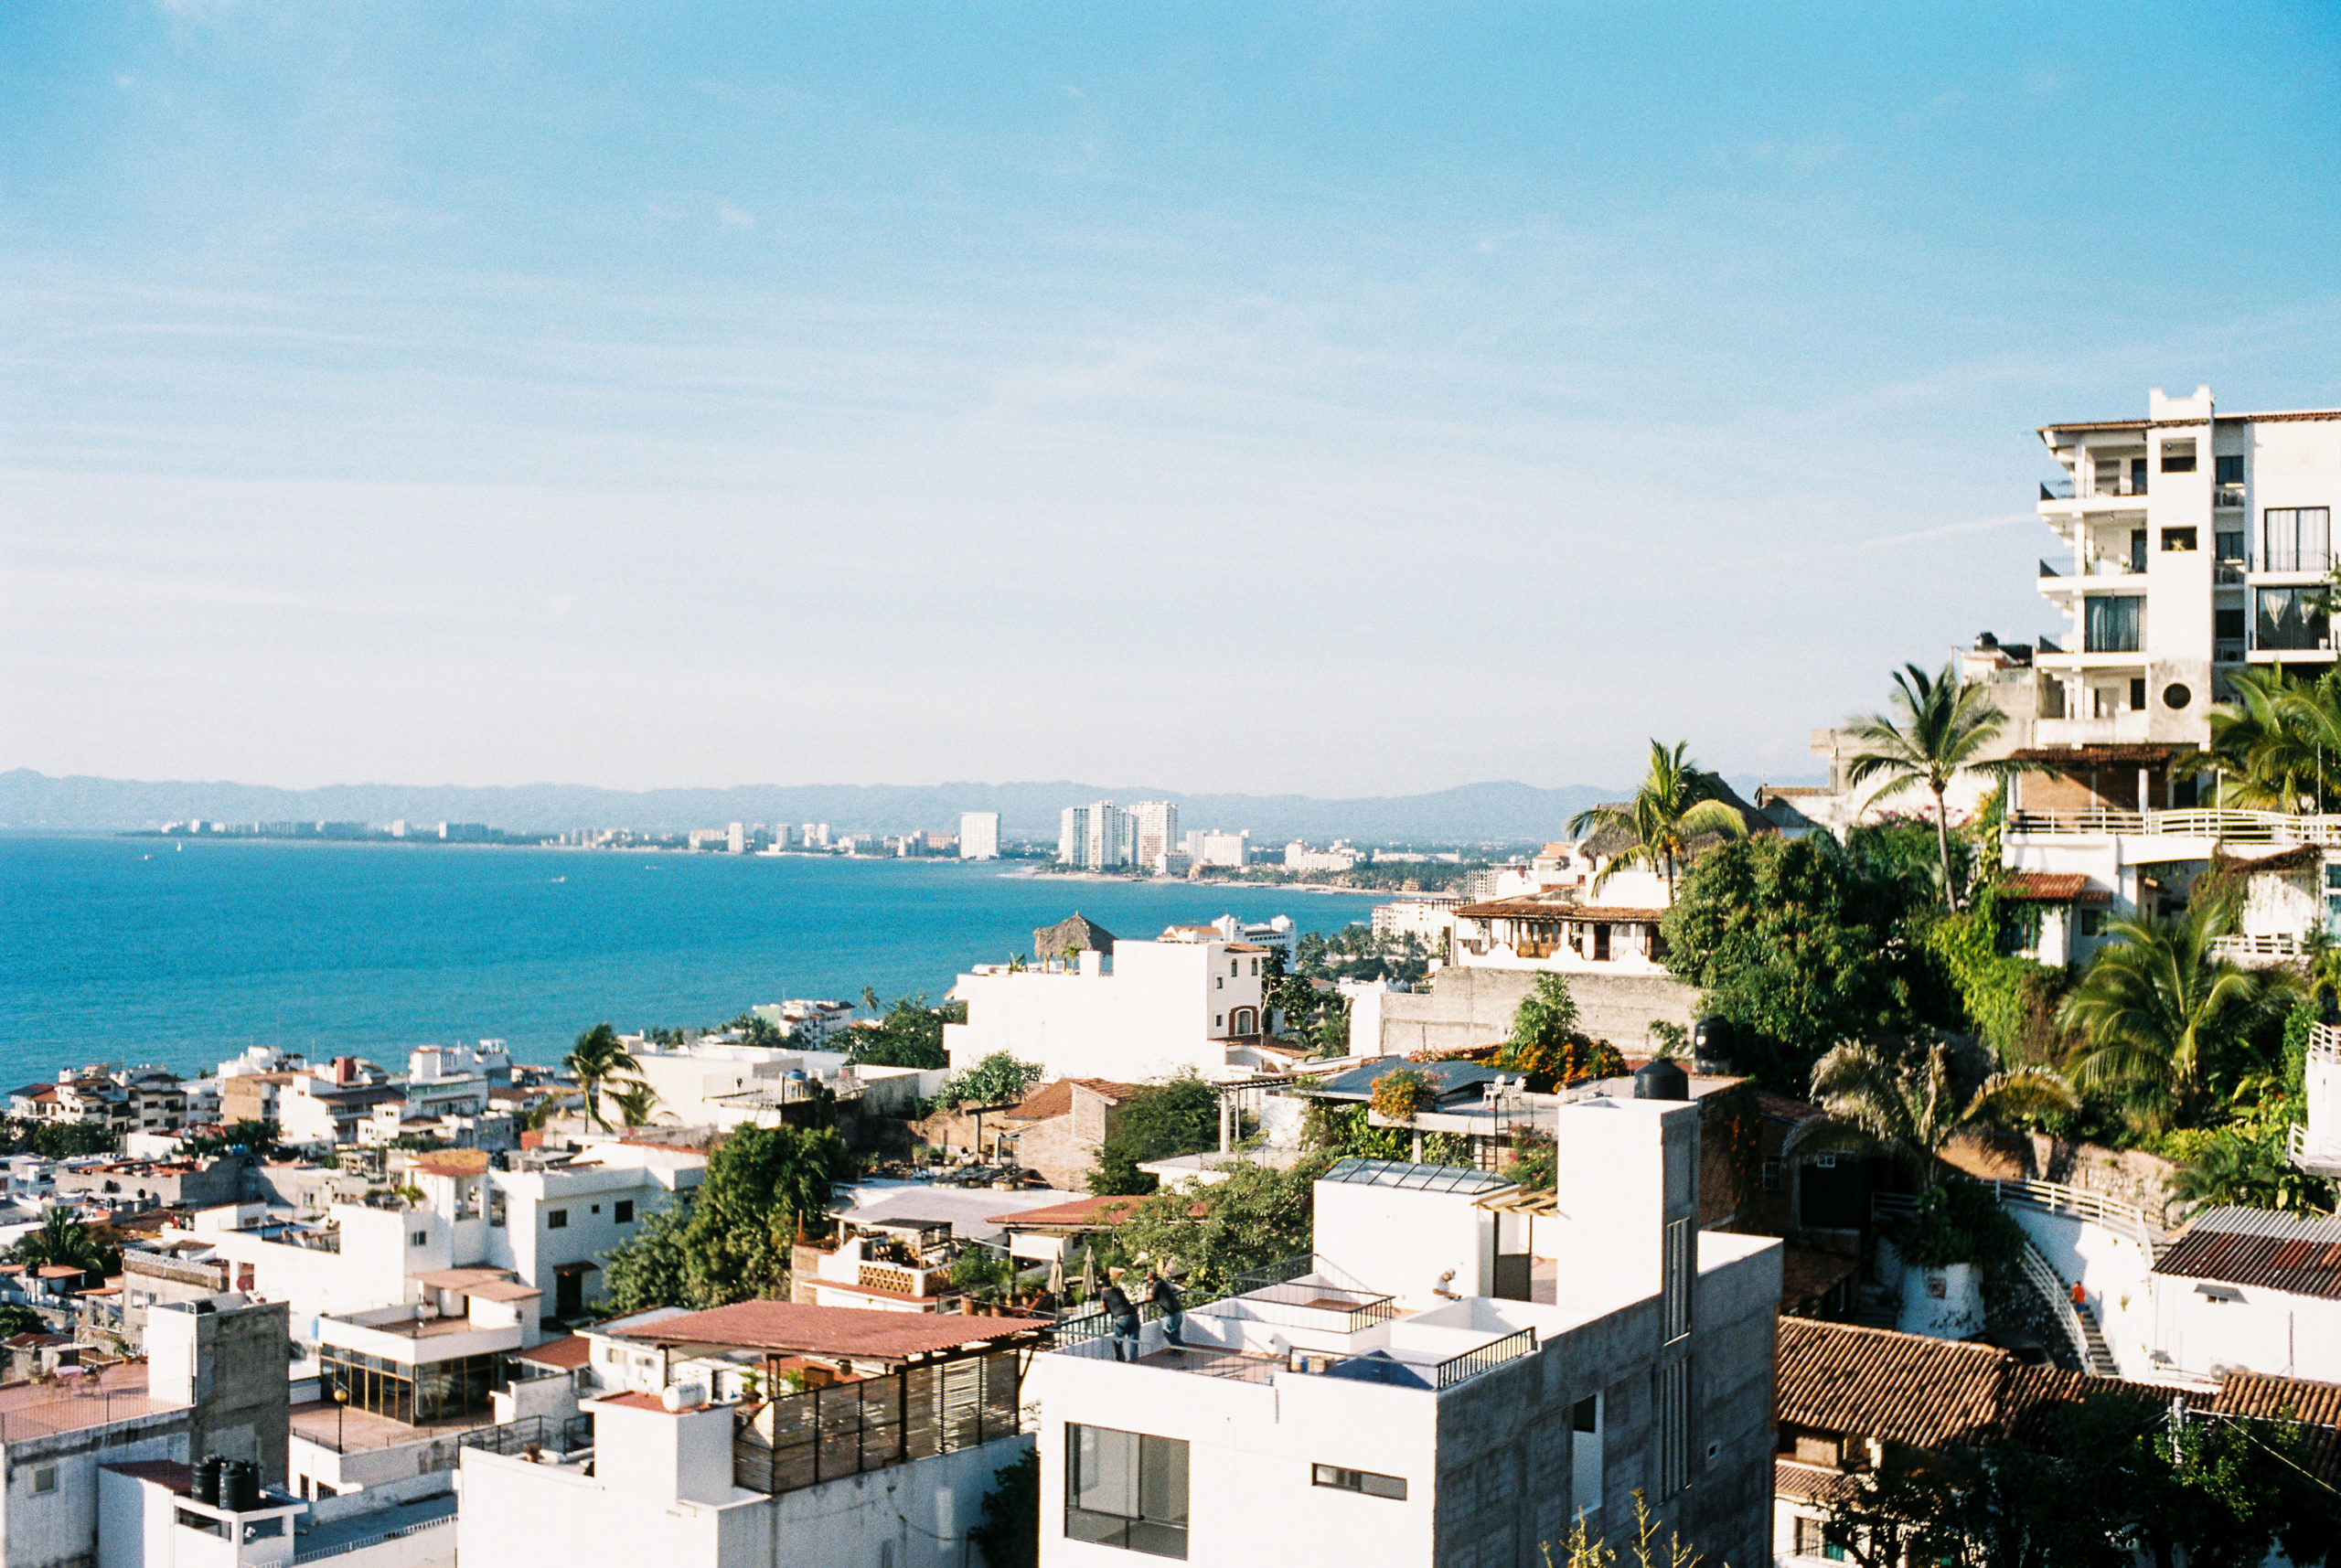 Views of Puerto Vallarta, Mexico